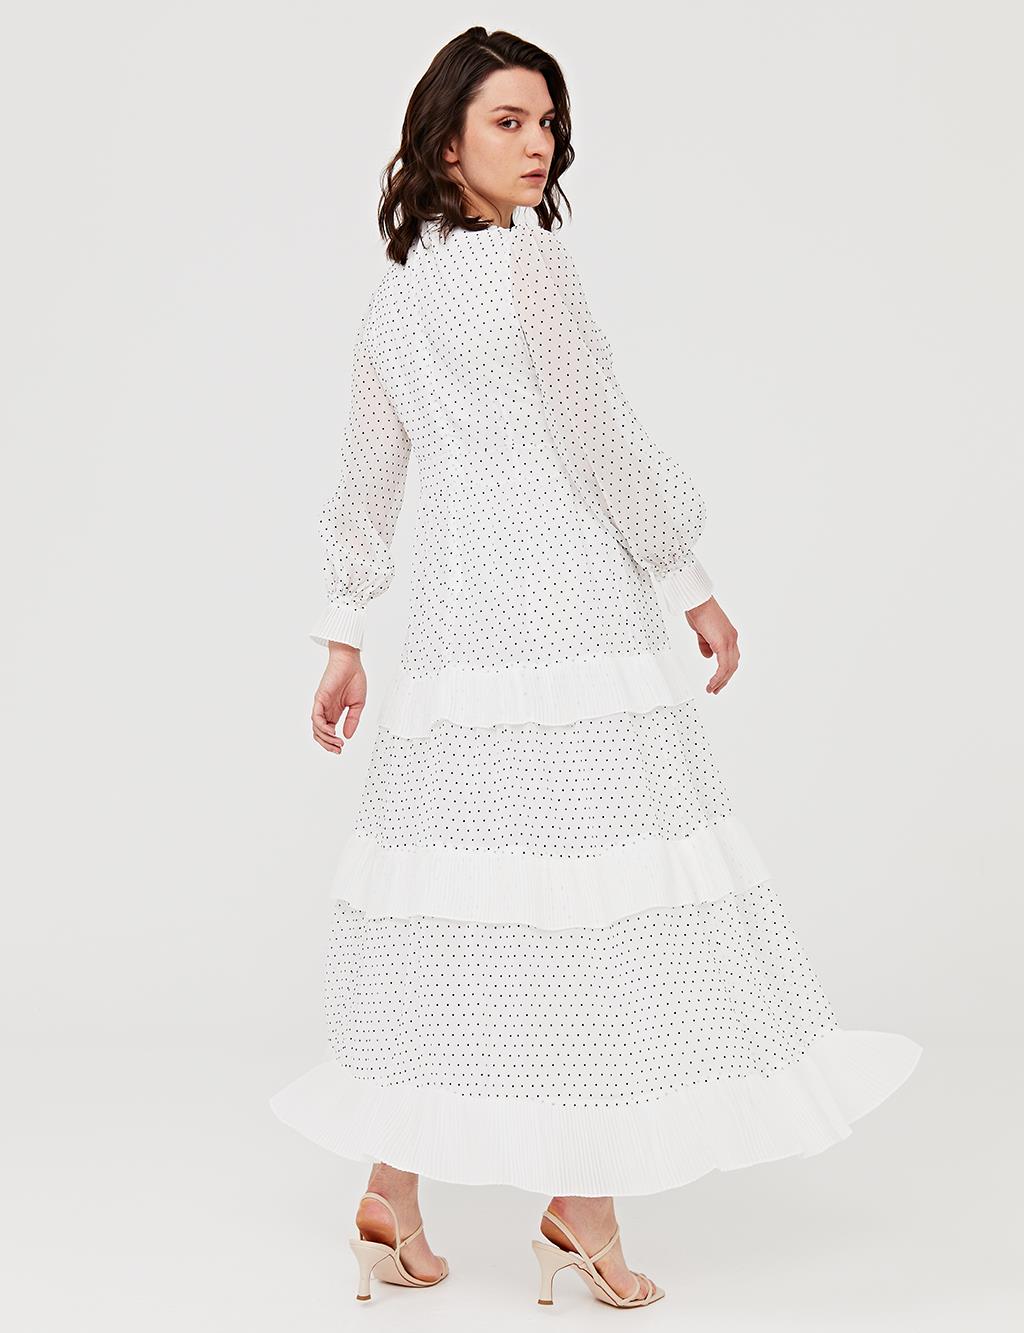 Folded Skirt Chiffon Detailed Dress B21 23139 White